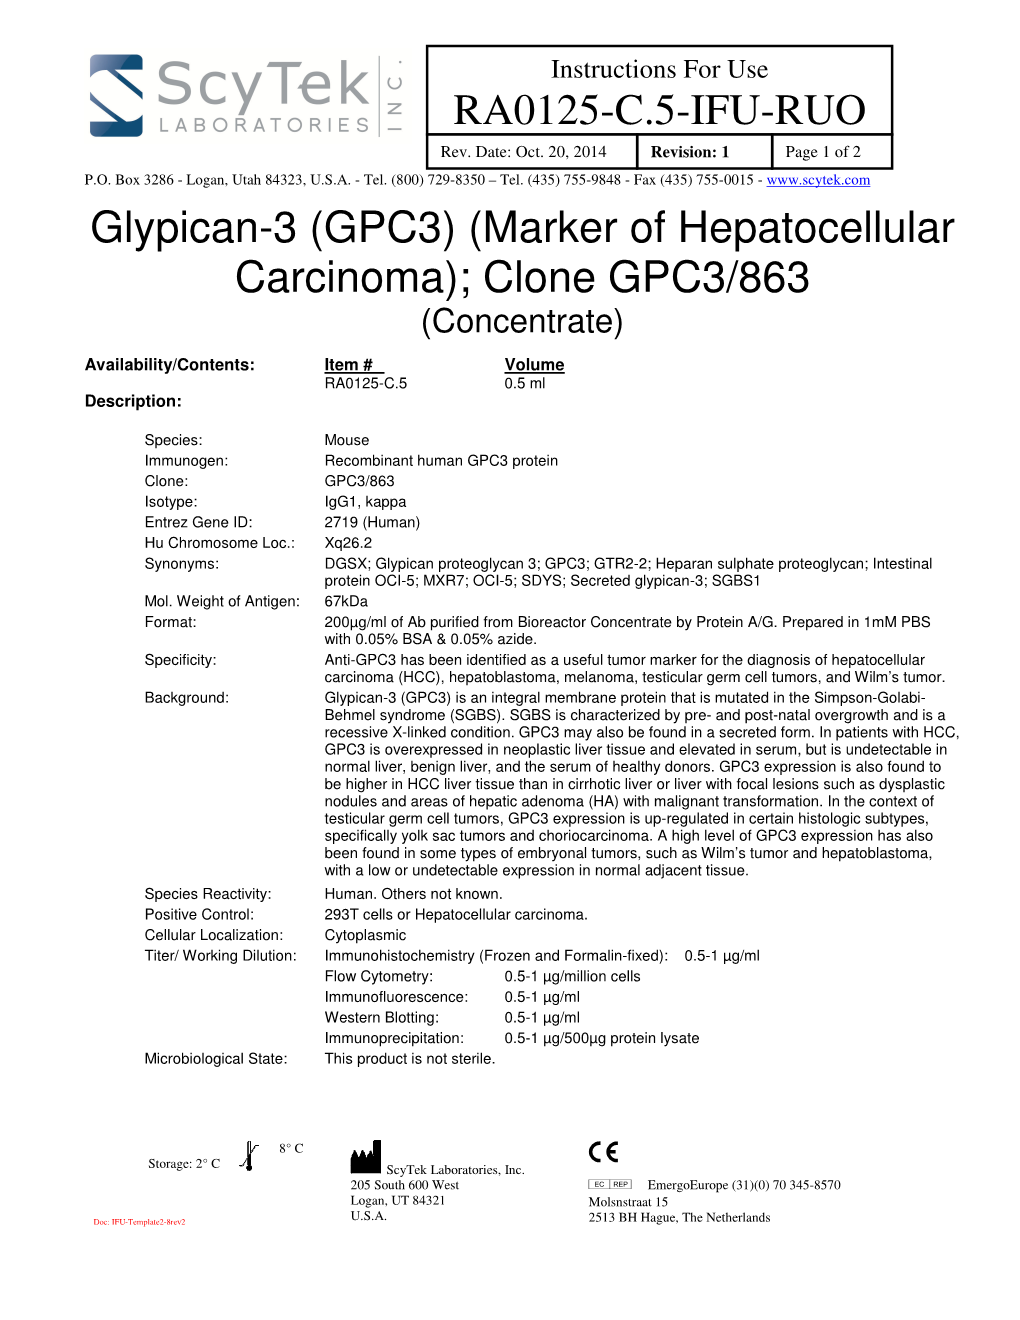 RA0125-C.5-IFU-RUO Glypican-3 (GPC3) (Marker of Hepatocellular Carcinoma)